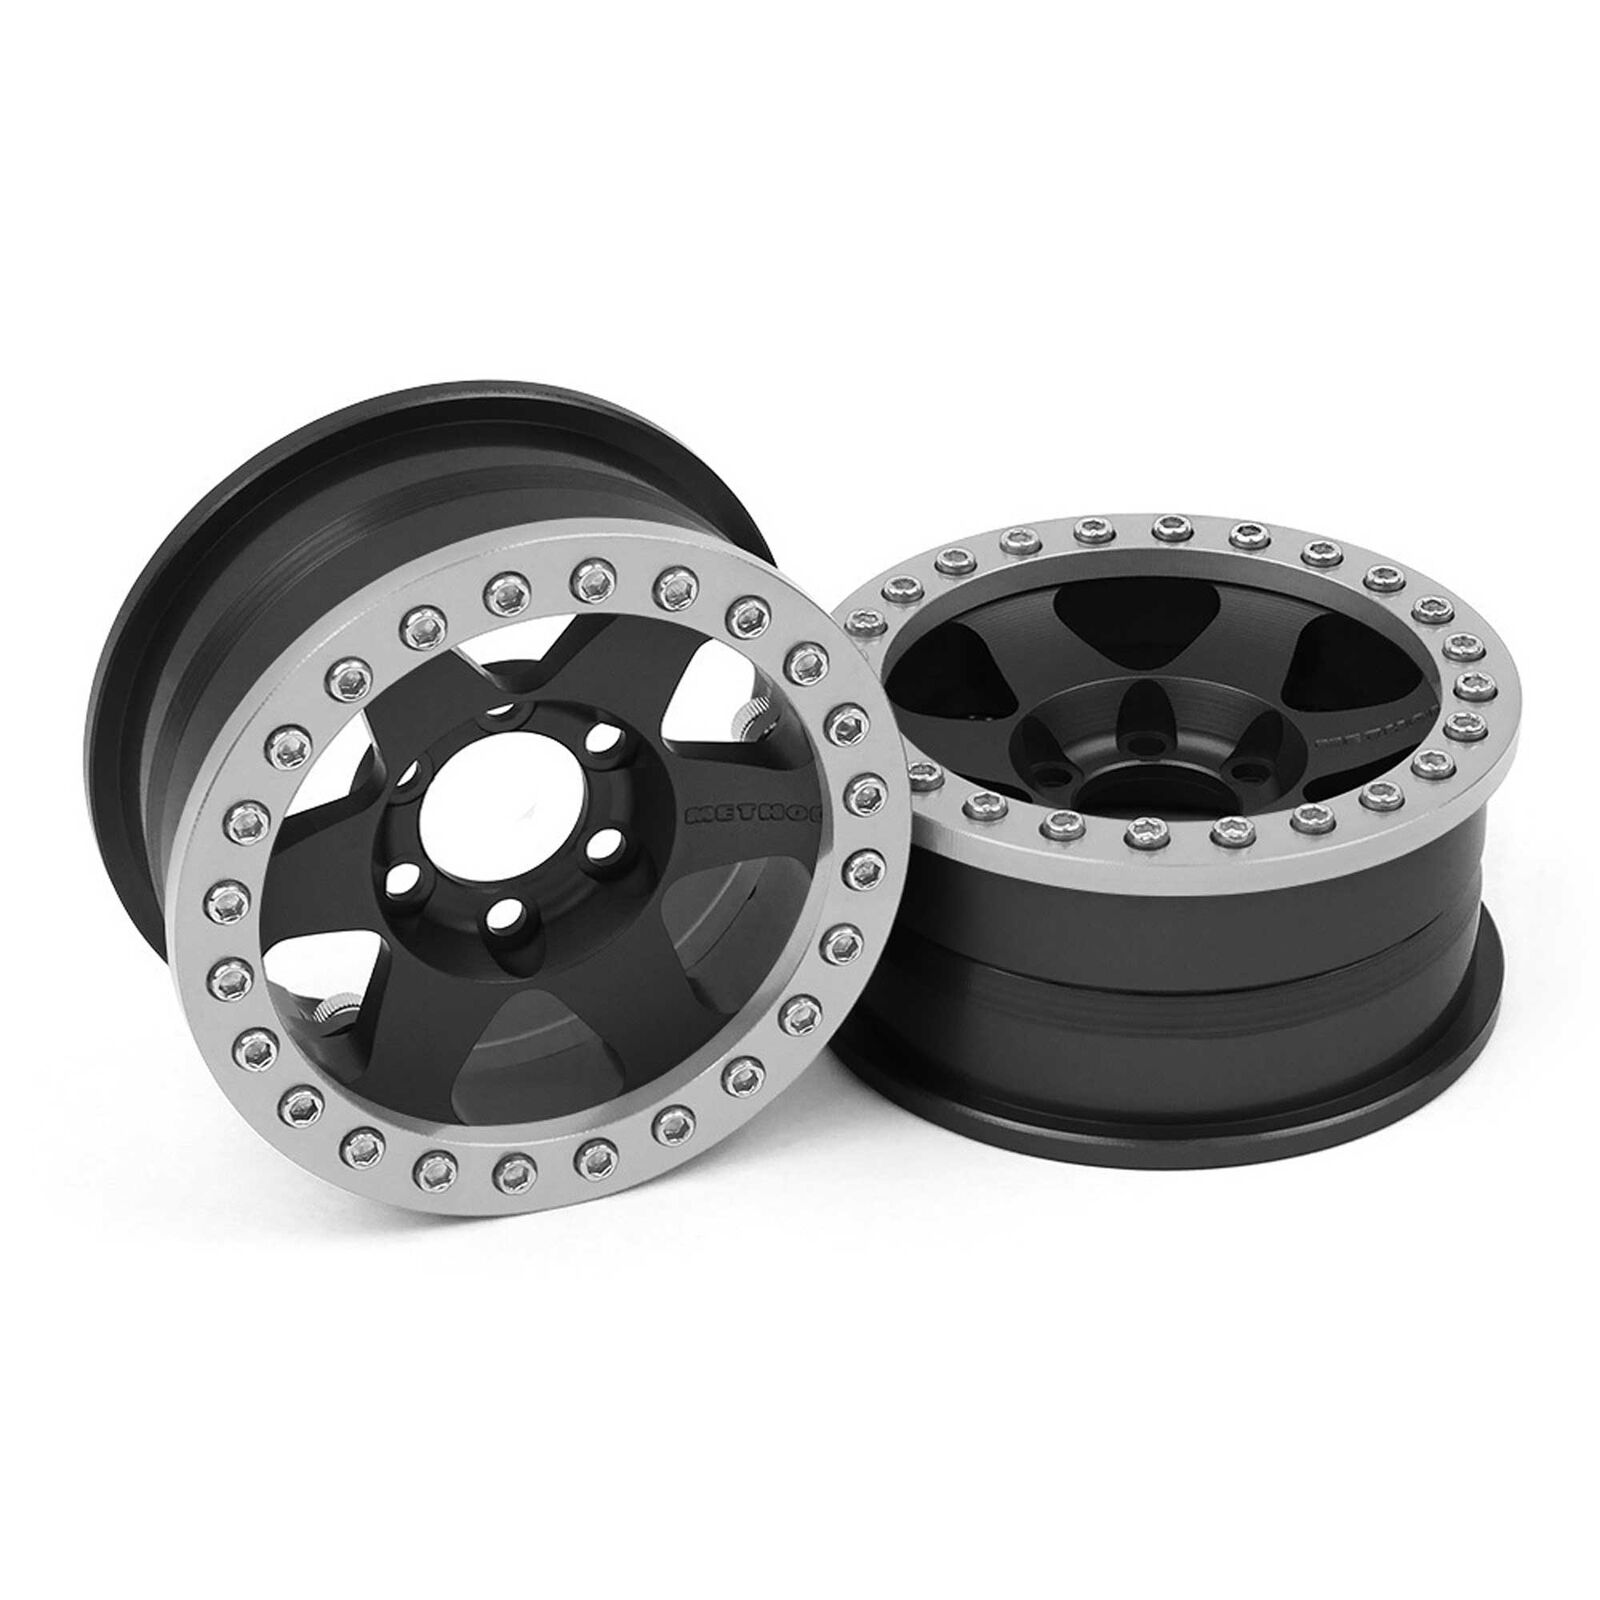 1/10 Method 310 1.9 Race Crawler Wheels, 12mm Hex, Black Anodized (2)